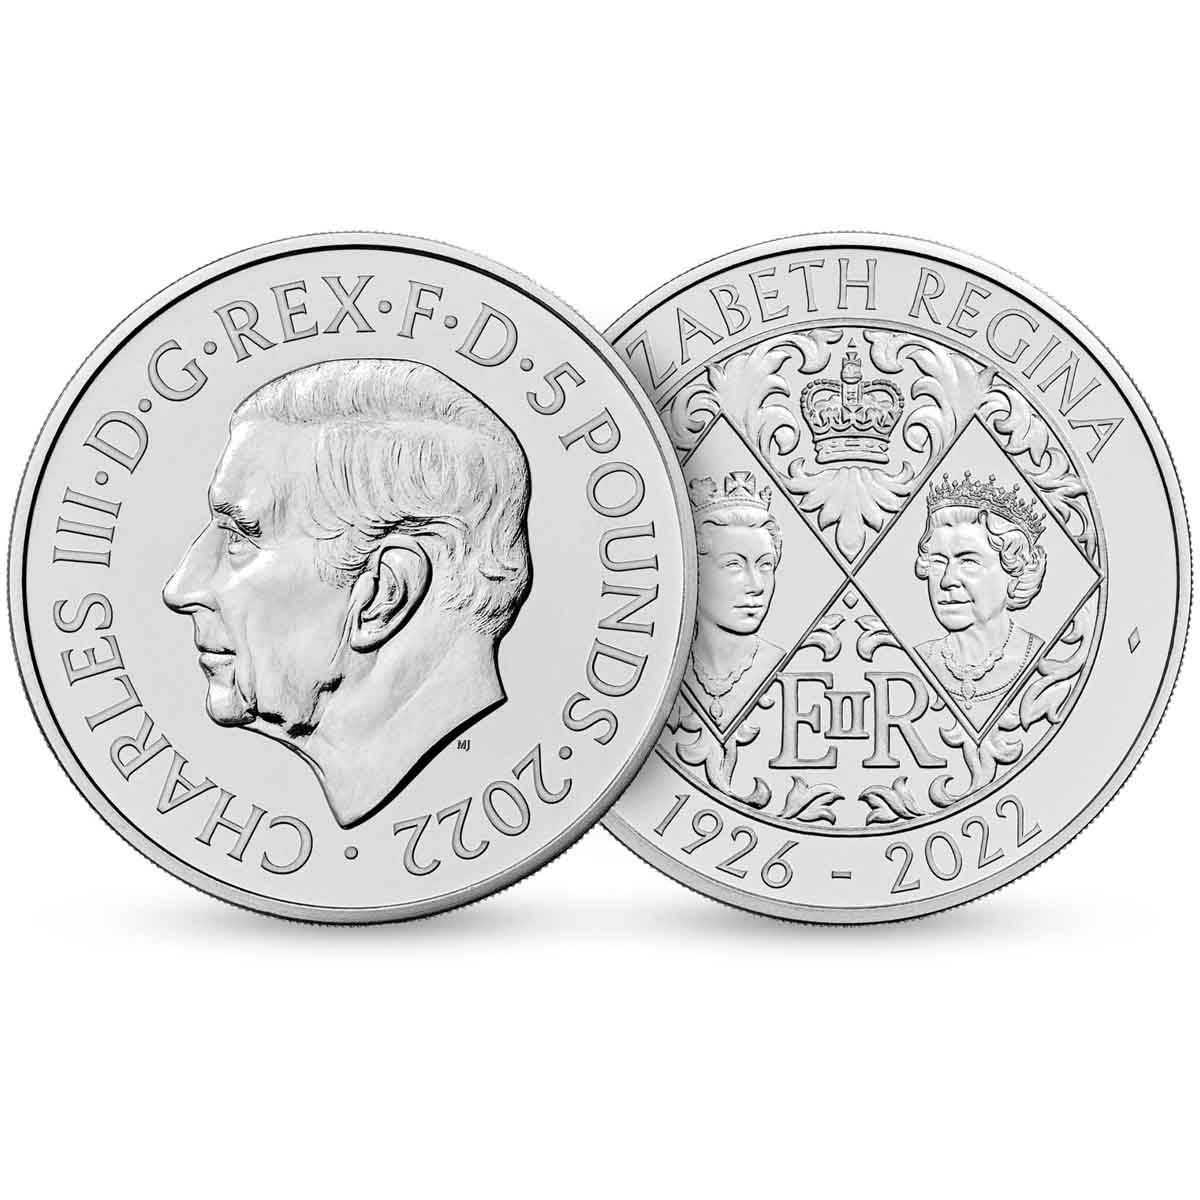 King Charles III 2022 £5 Queen Elizabeth II Tribute Brilliant Uncirculated Coin